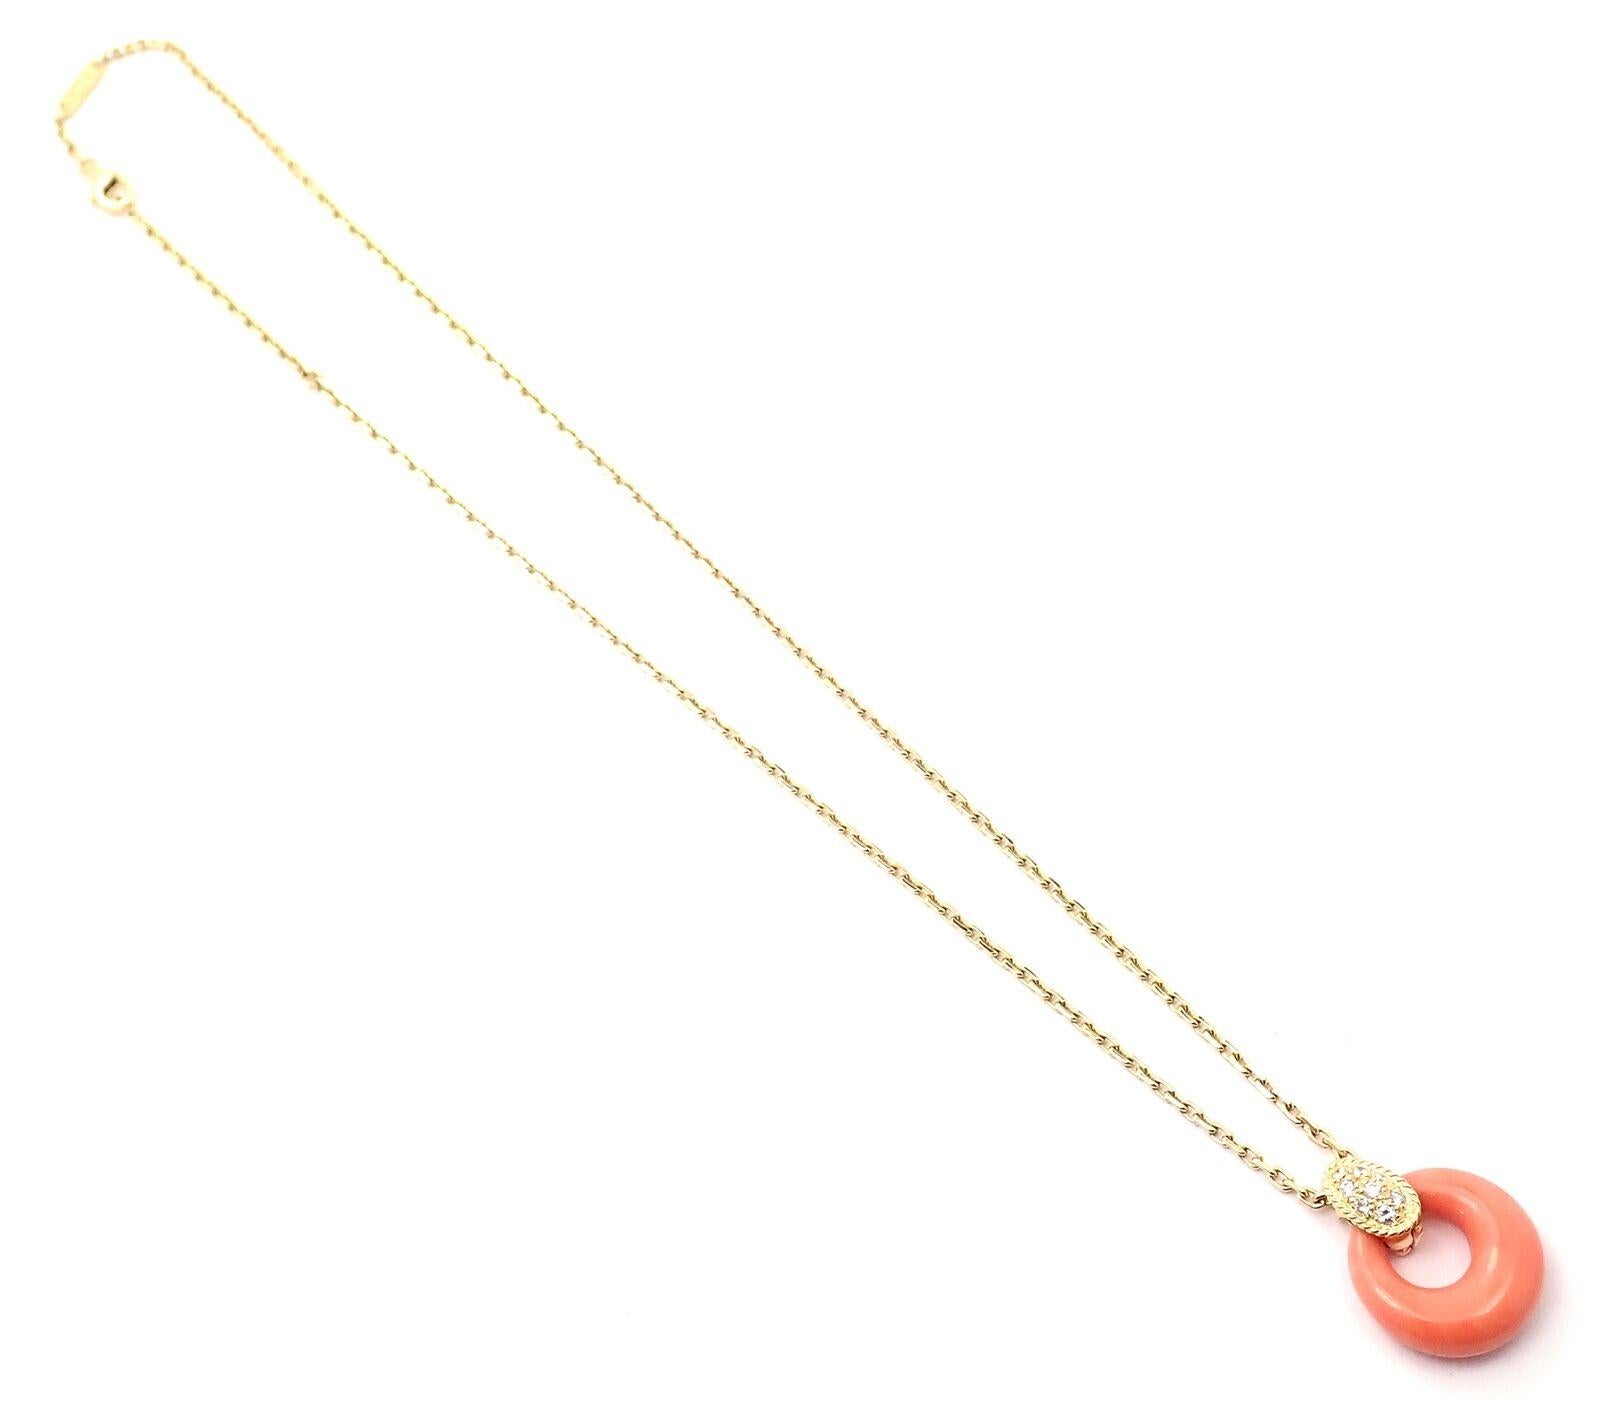 Brilliant Cut Van Cleef & Arpels Diamond Coral Yellow Gold Pendant Necklace For Sale